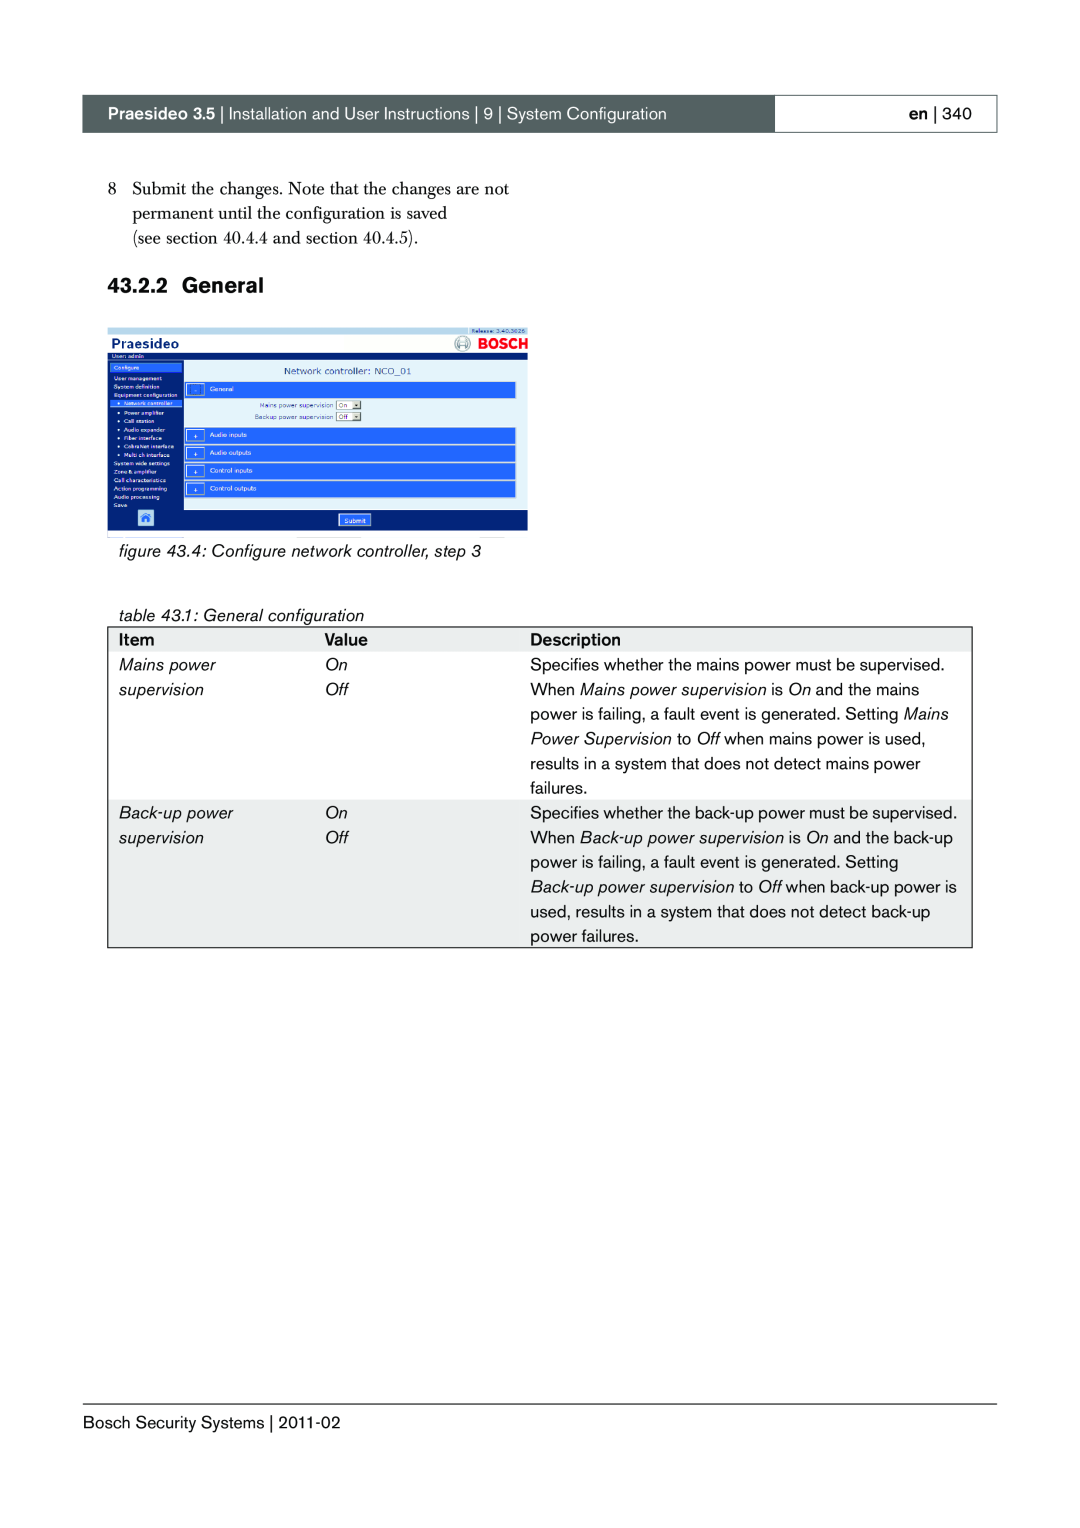 Bosch Appliances 3.5 manual 4 Configure network controller, step, 1: General configuration, Mains power, supervision 